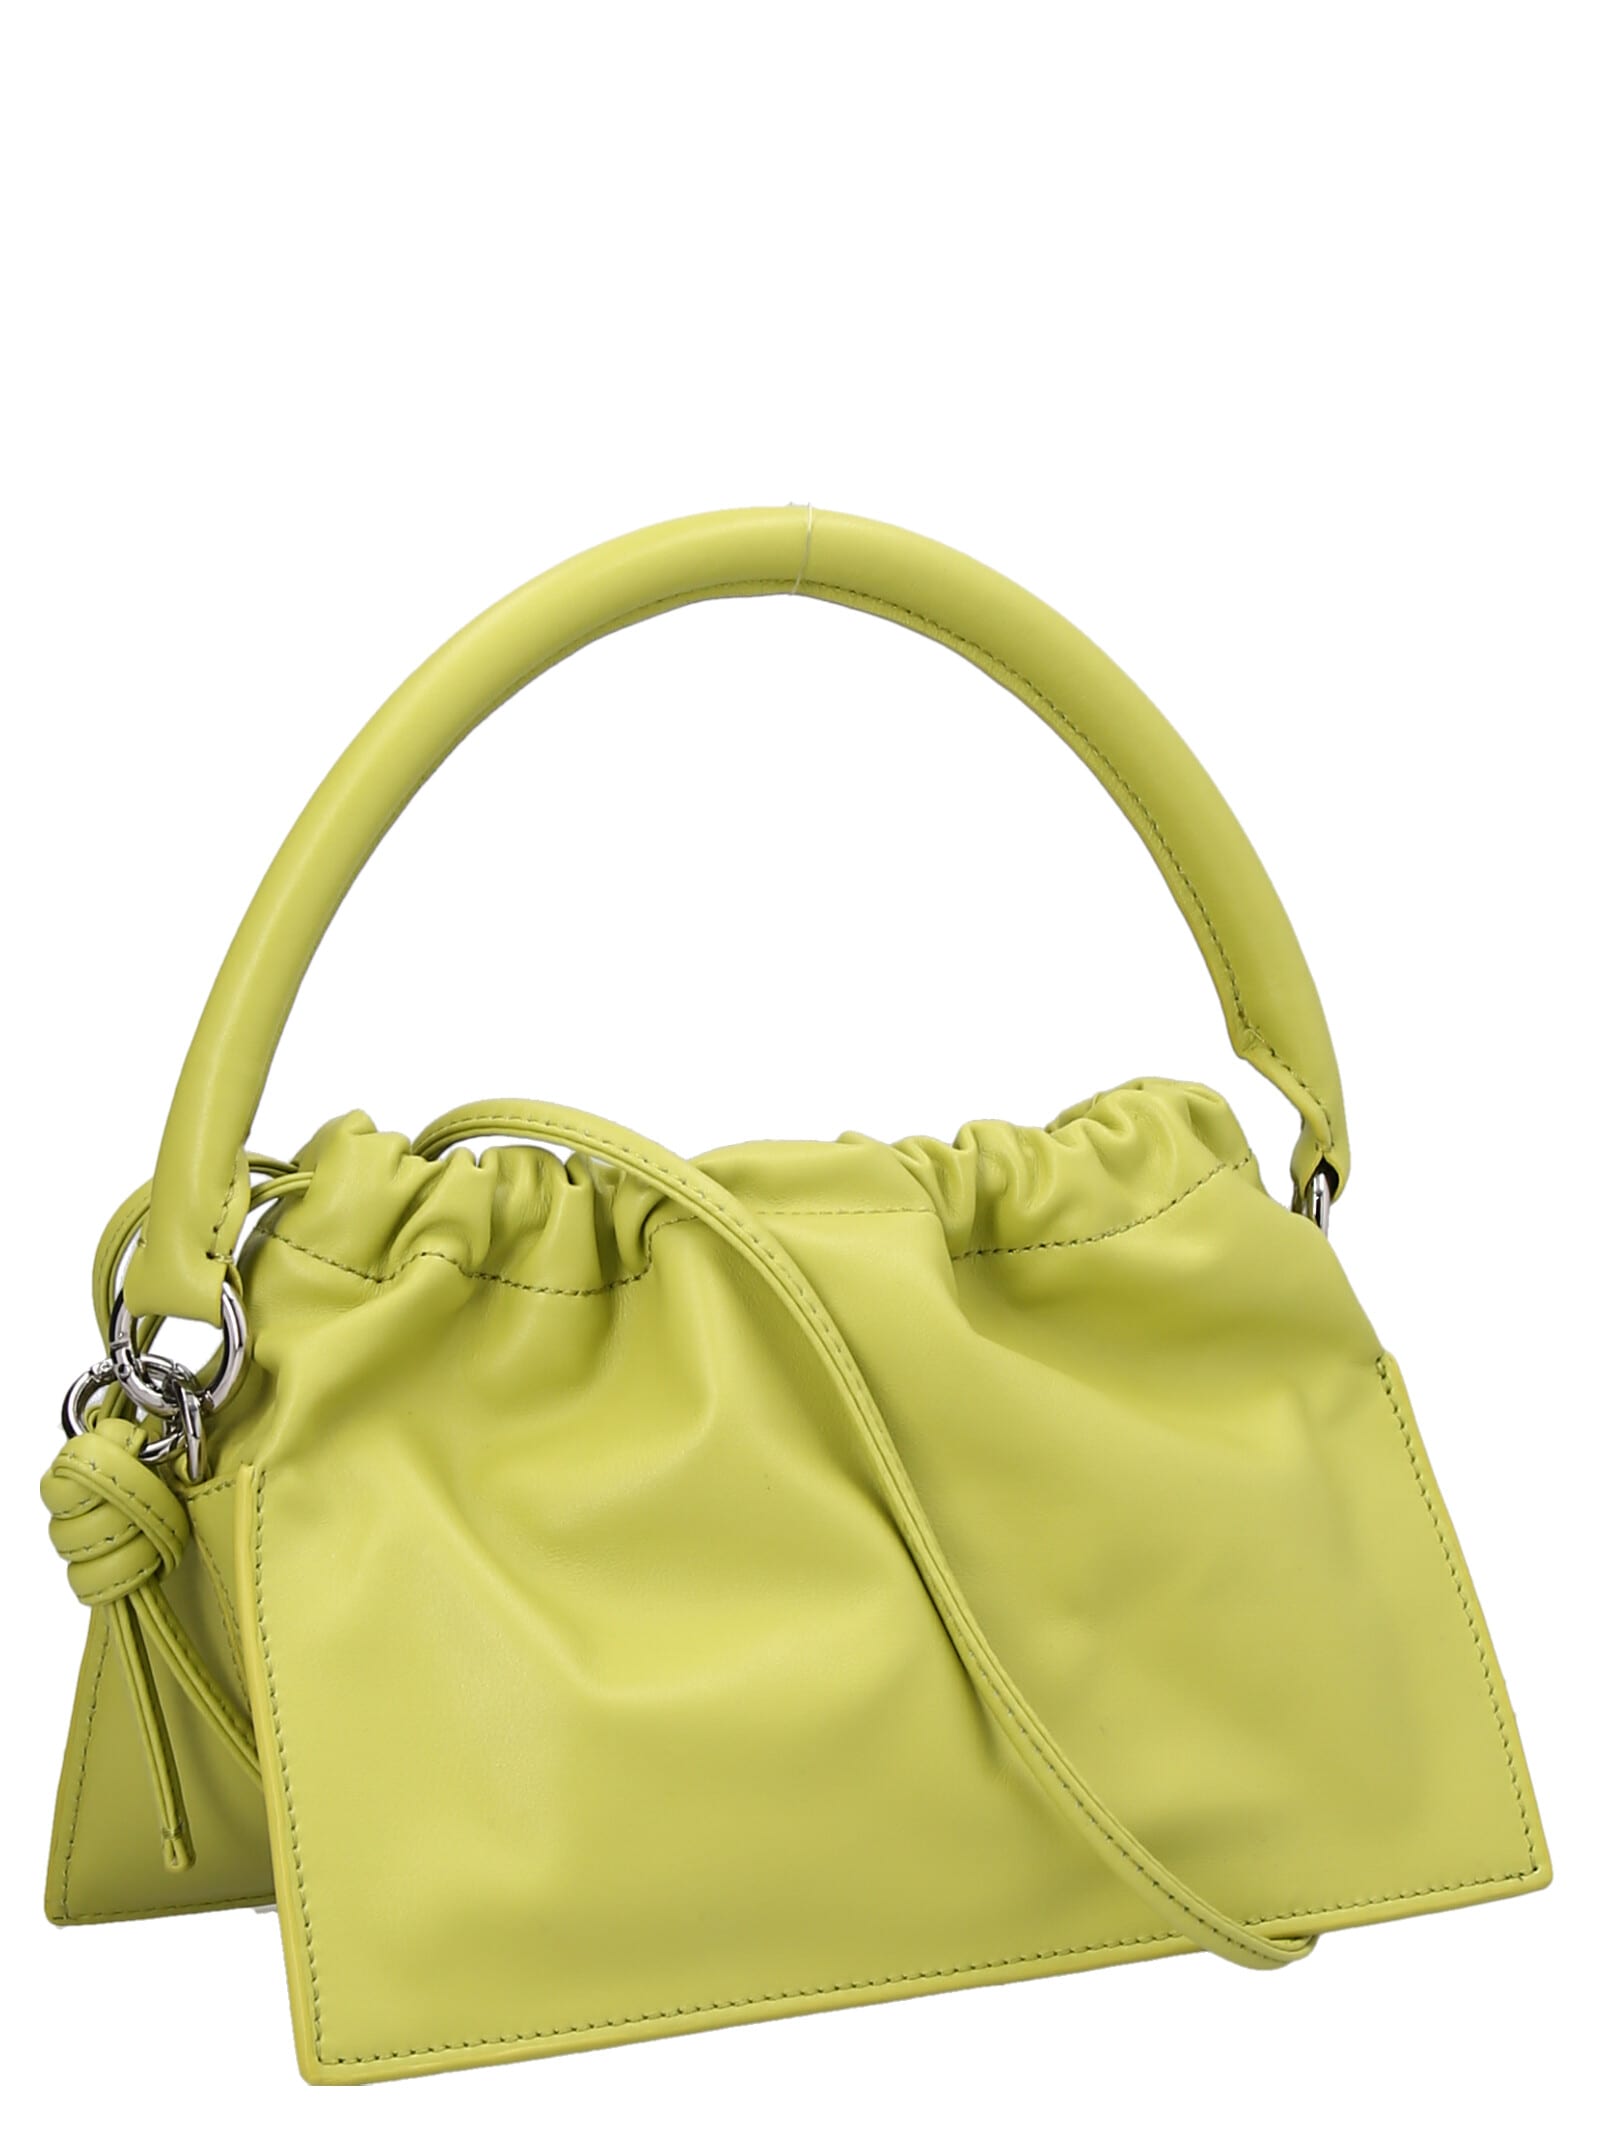 Shop Yuzefi Bom Handbag In Green